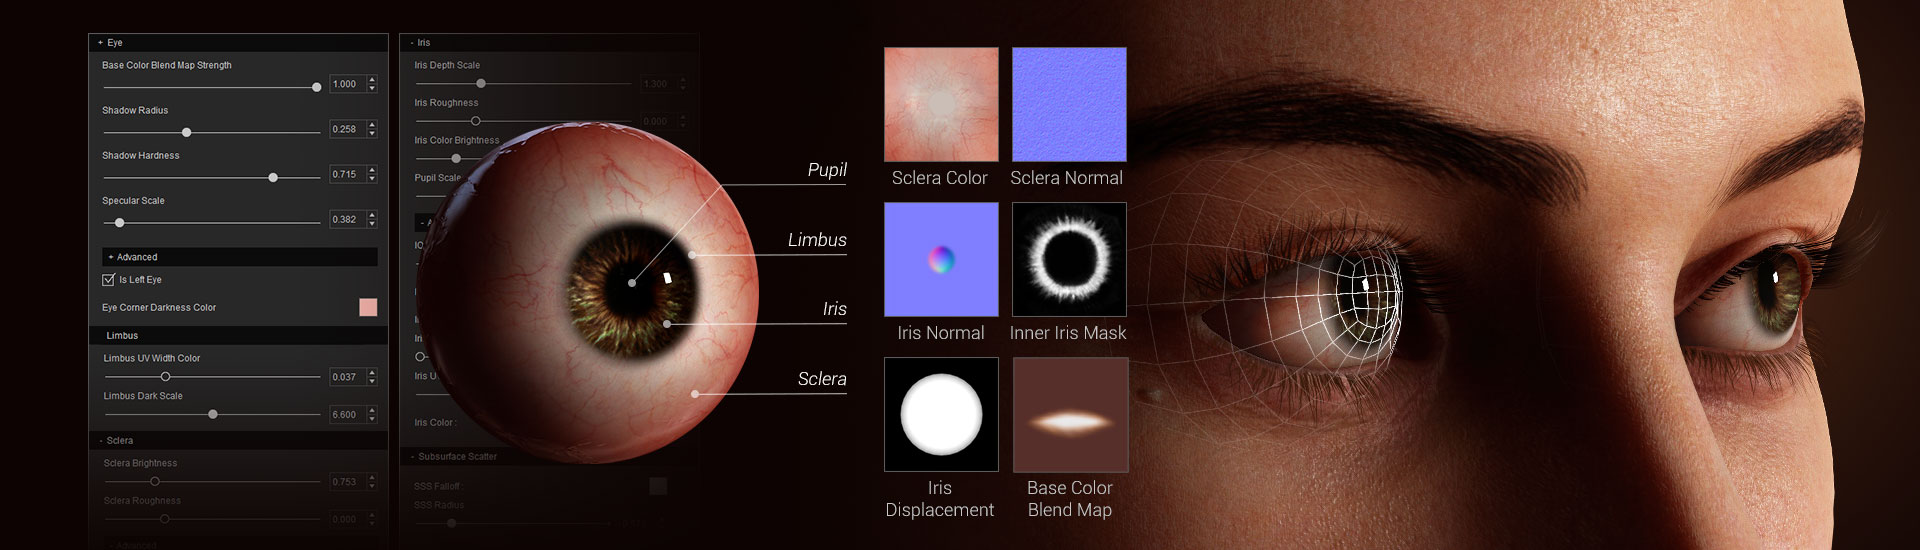 Digital human eye shader